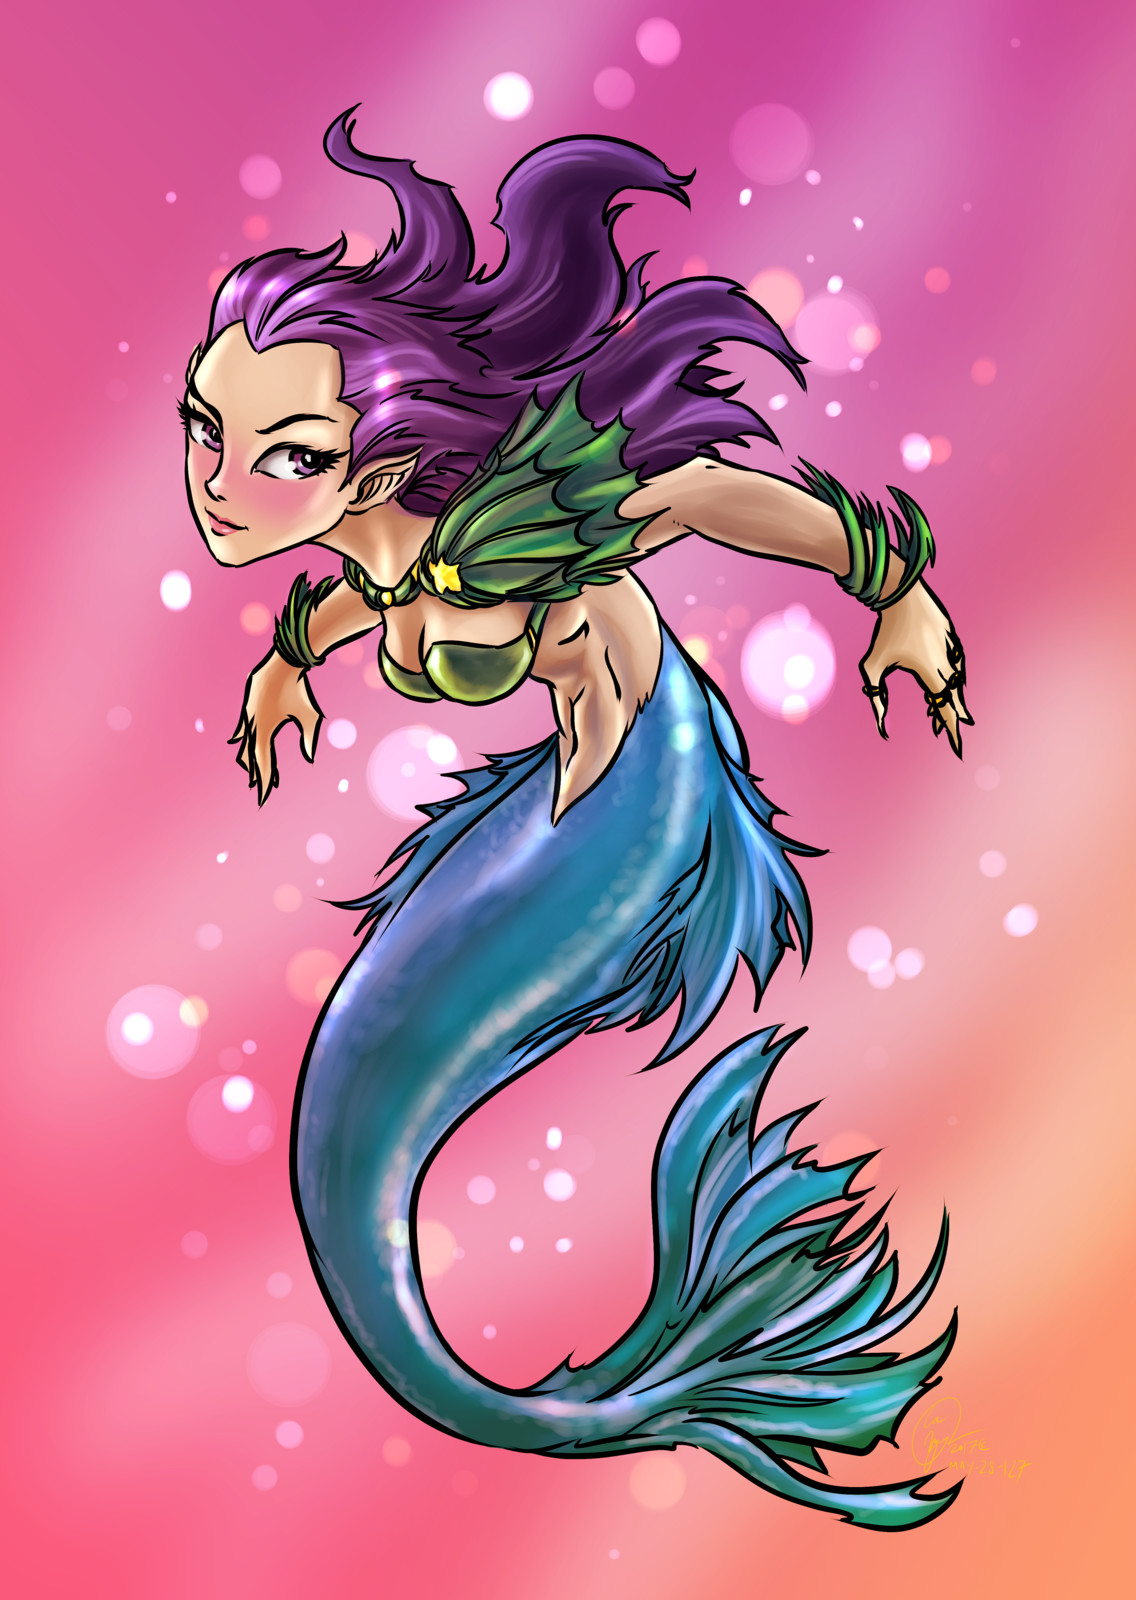 Littlest, Mermaid Concept